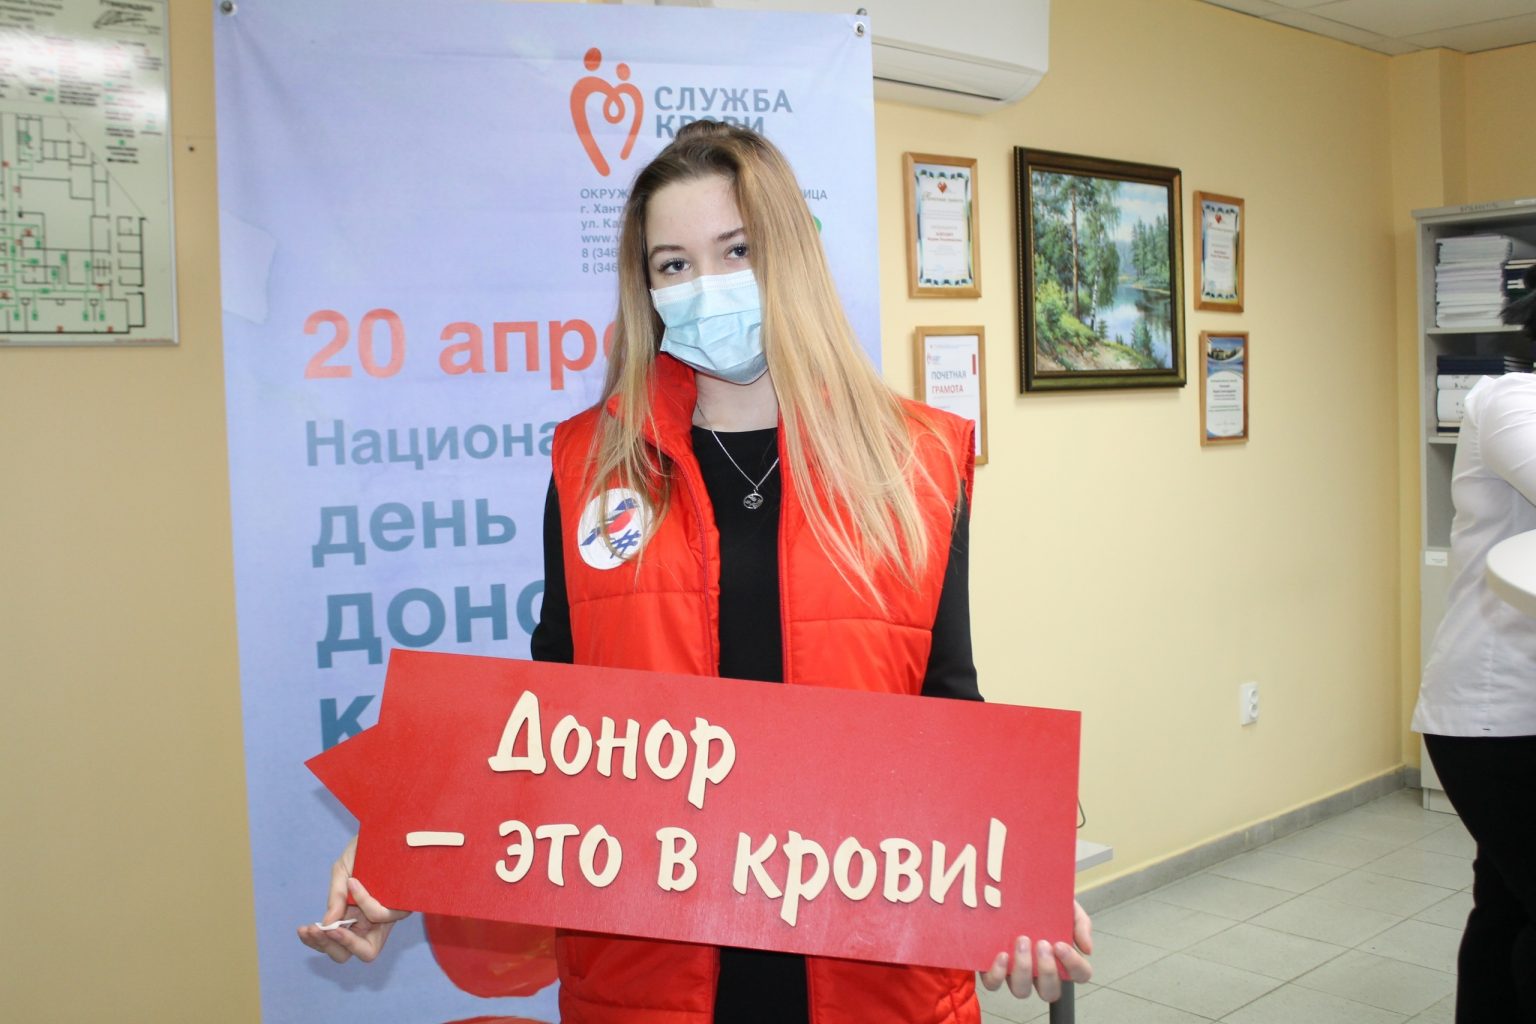 Покажи донор. День донора. День донора в России. 20 Апреля день донора. Акция день донора в России.